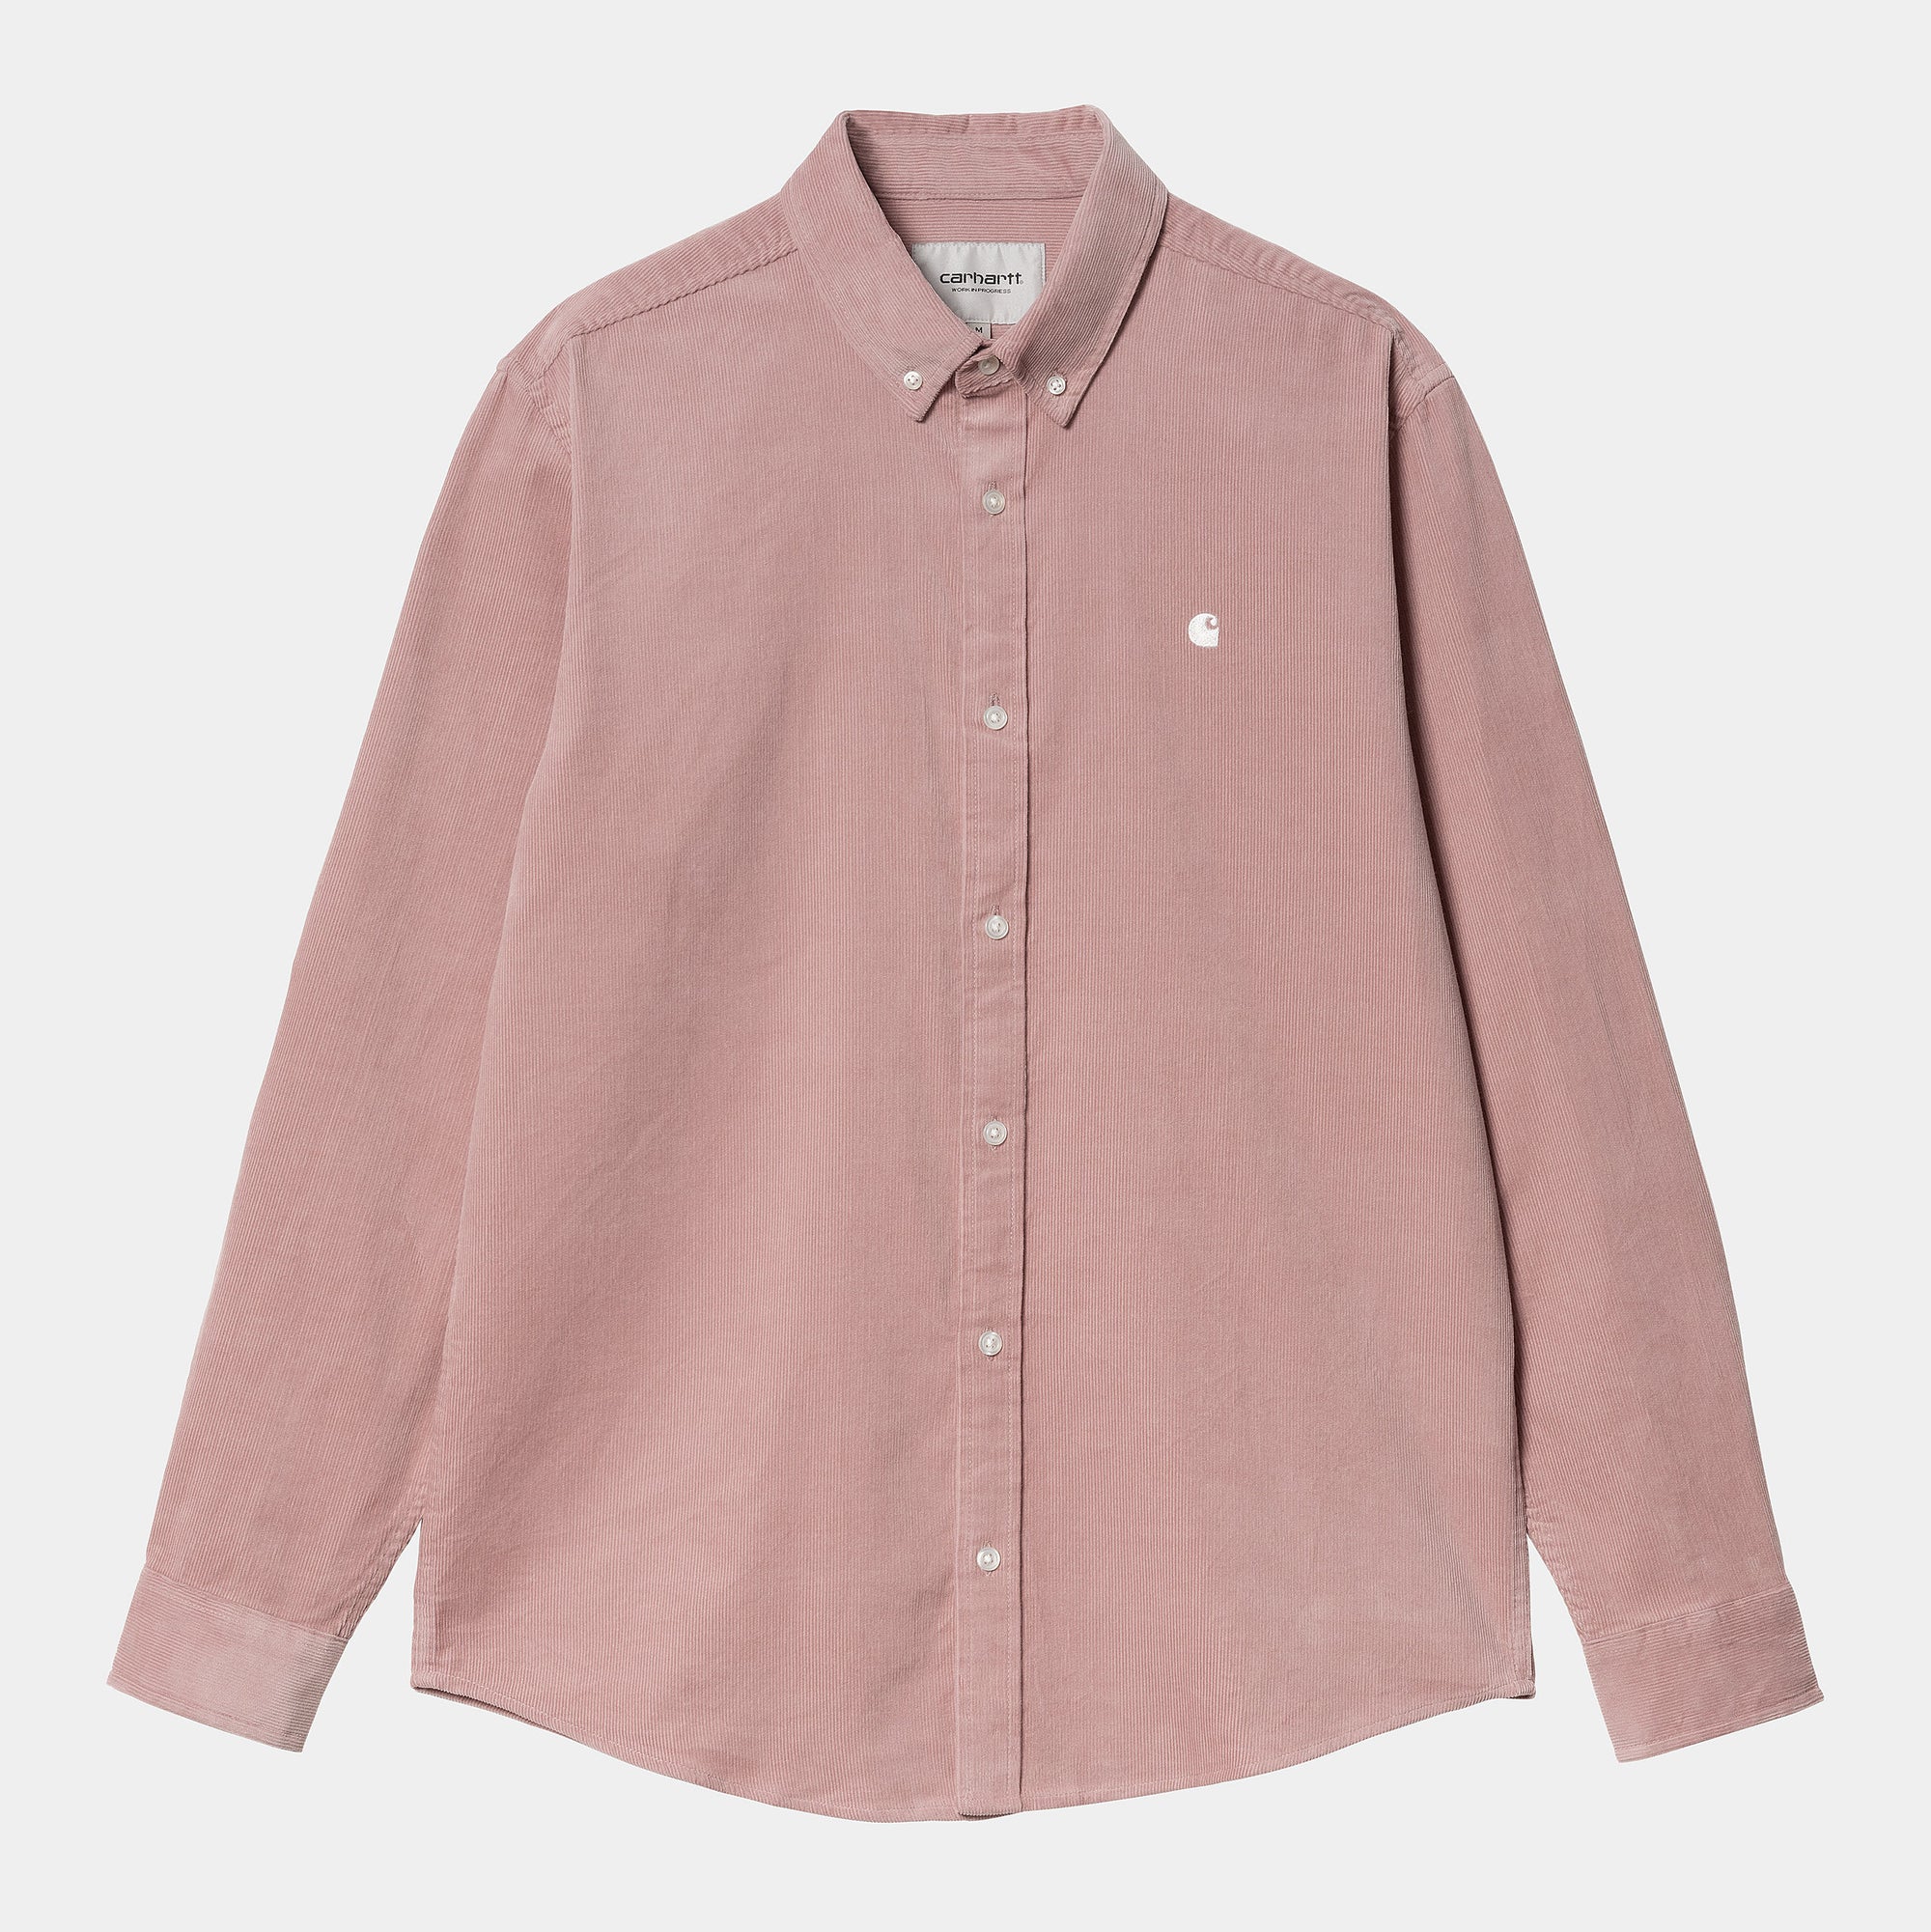 Carhartt WIP Madison Fine Cord Shirt - Pink / Wax